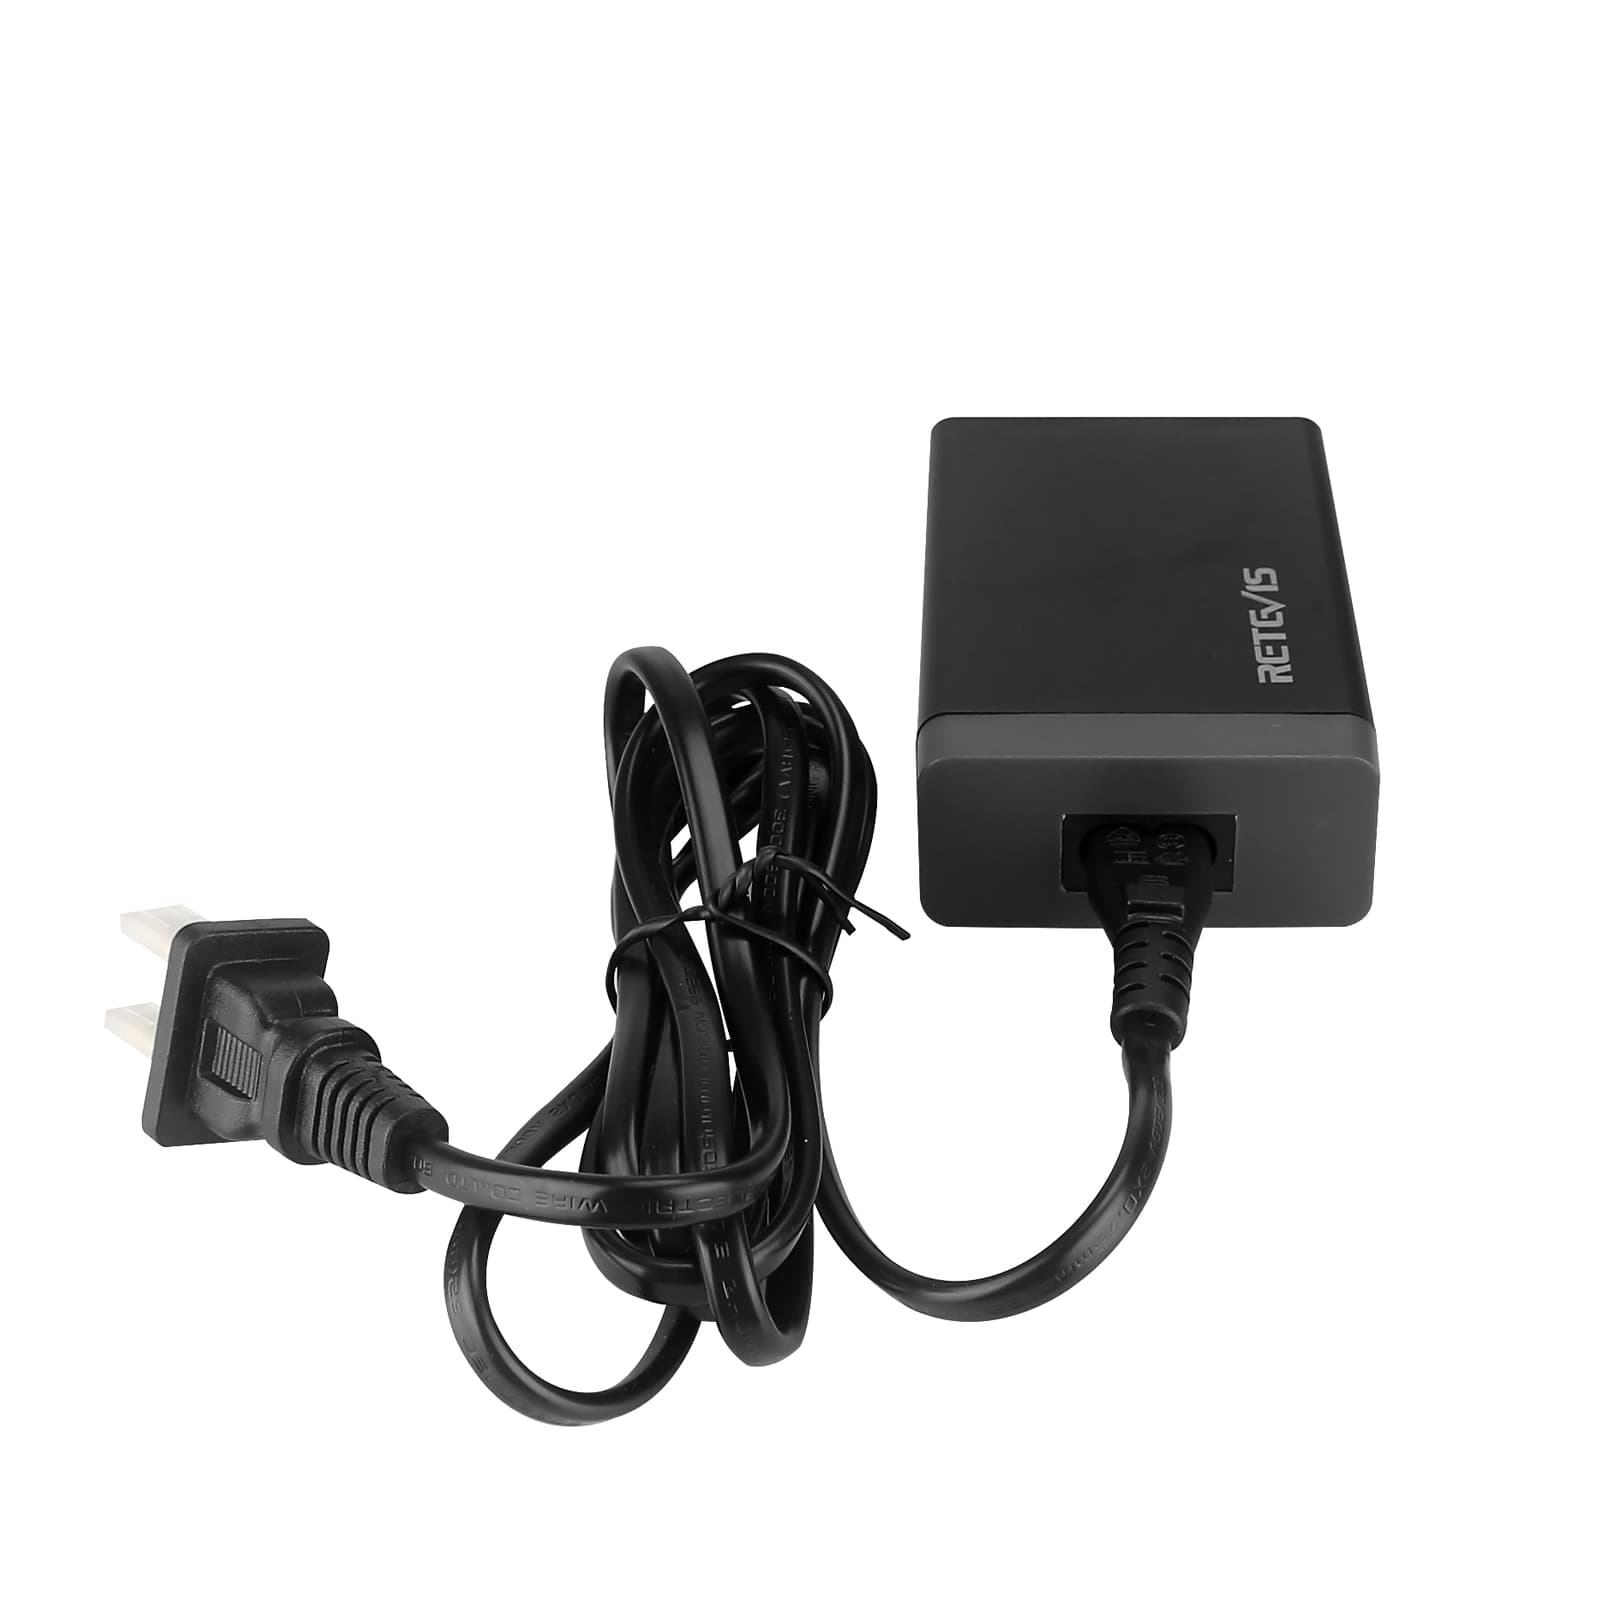 RTC501 Universal 5-Port USB Smart AC Charger